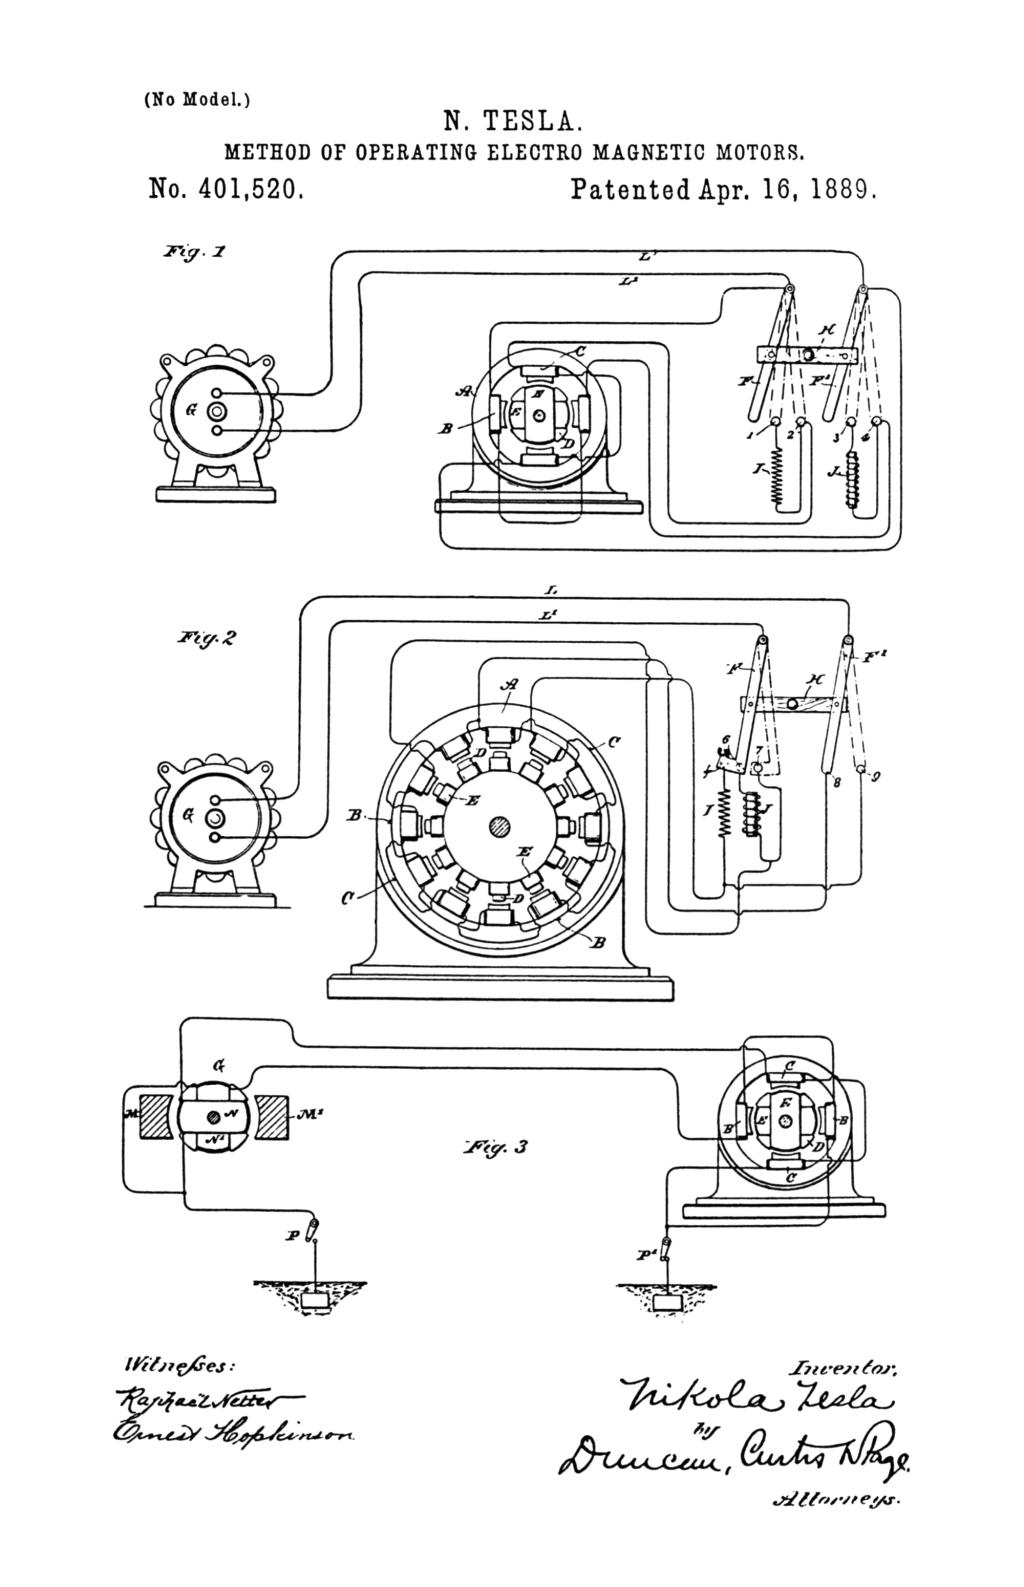 Nikola Tesla U.S. Patent 401,520 - Method of Operating Electro-Magnetic Motors - Image 1